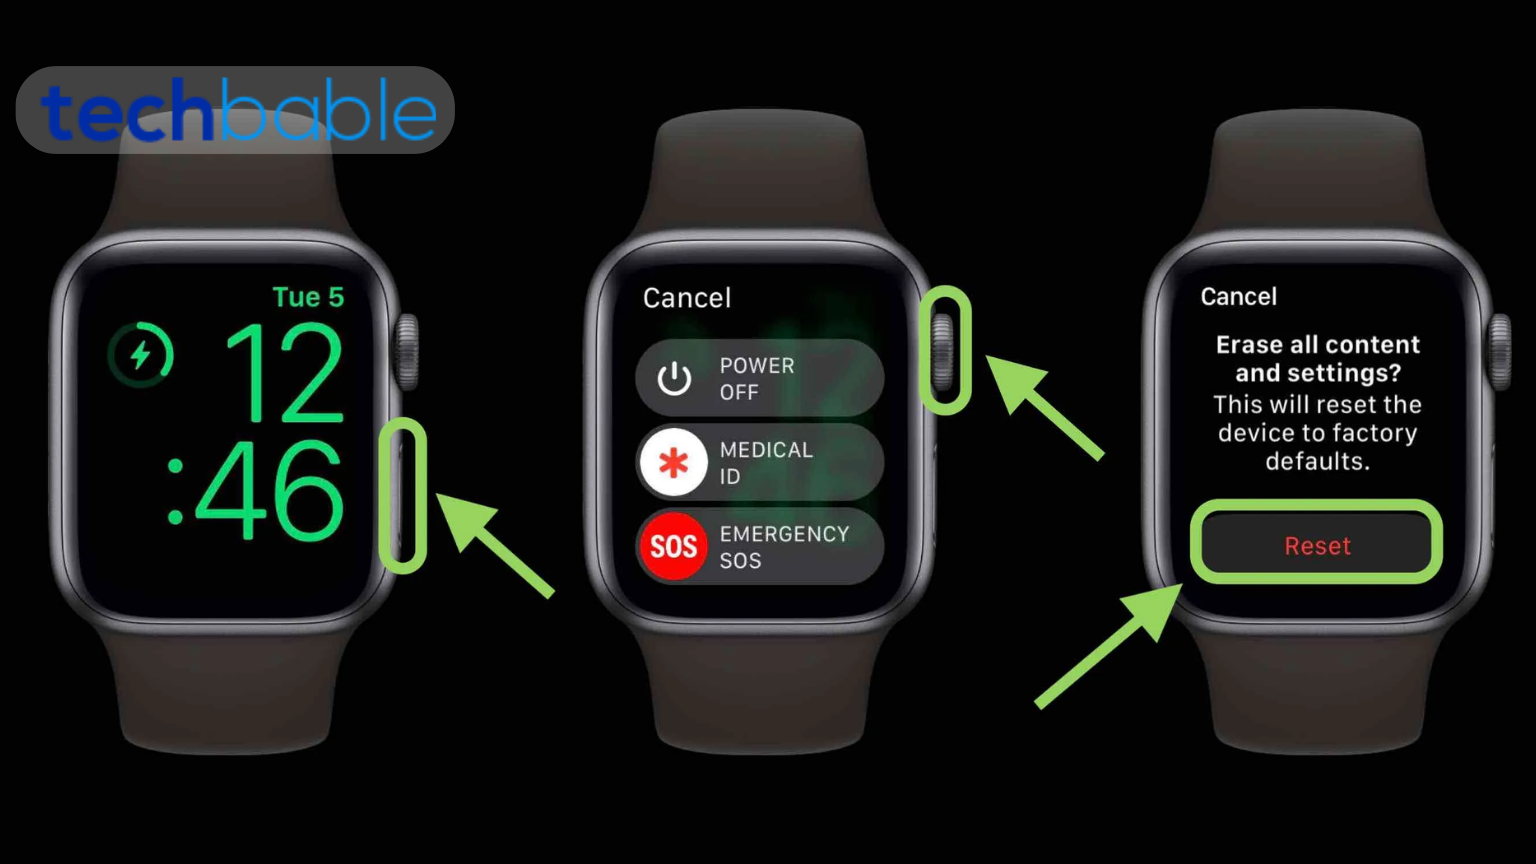 How to unpair Apple watch